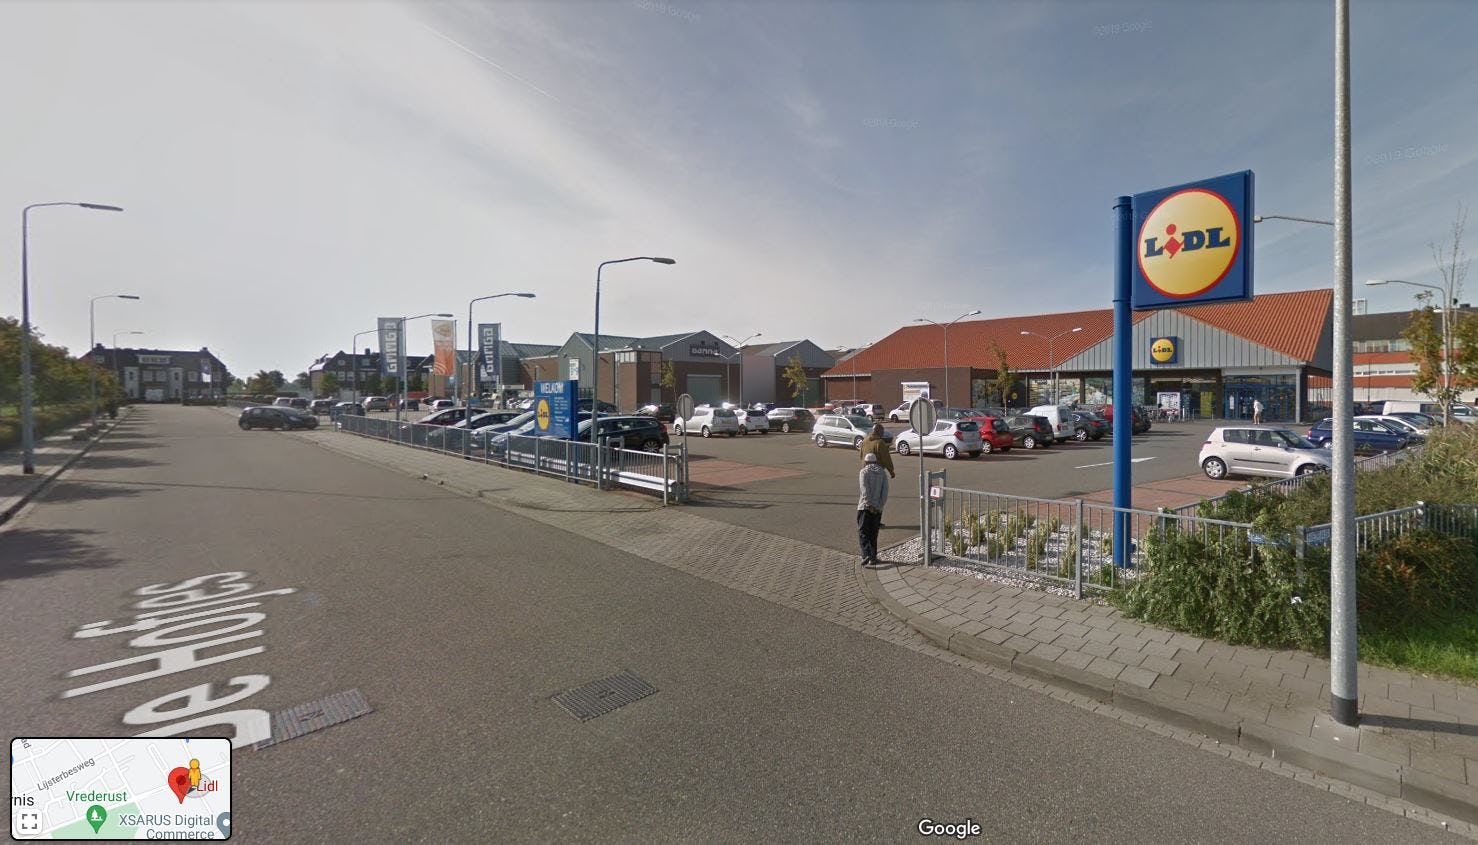 Het huidige filiaal van Lidl in Middelharnis. Foto: Google Streetview.